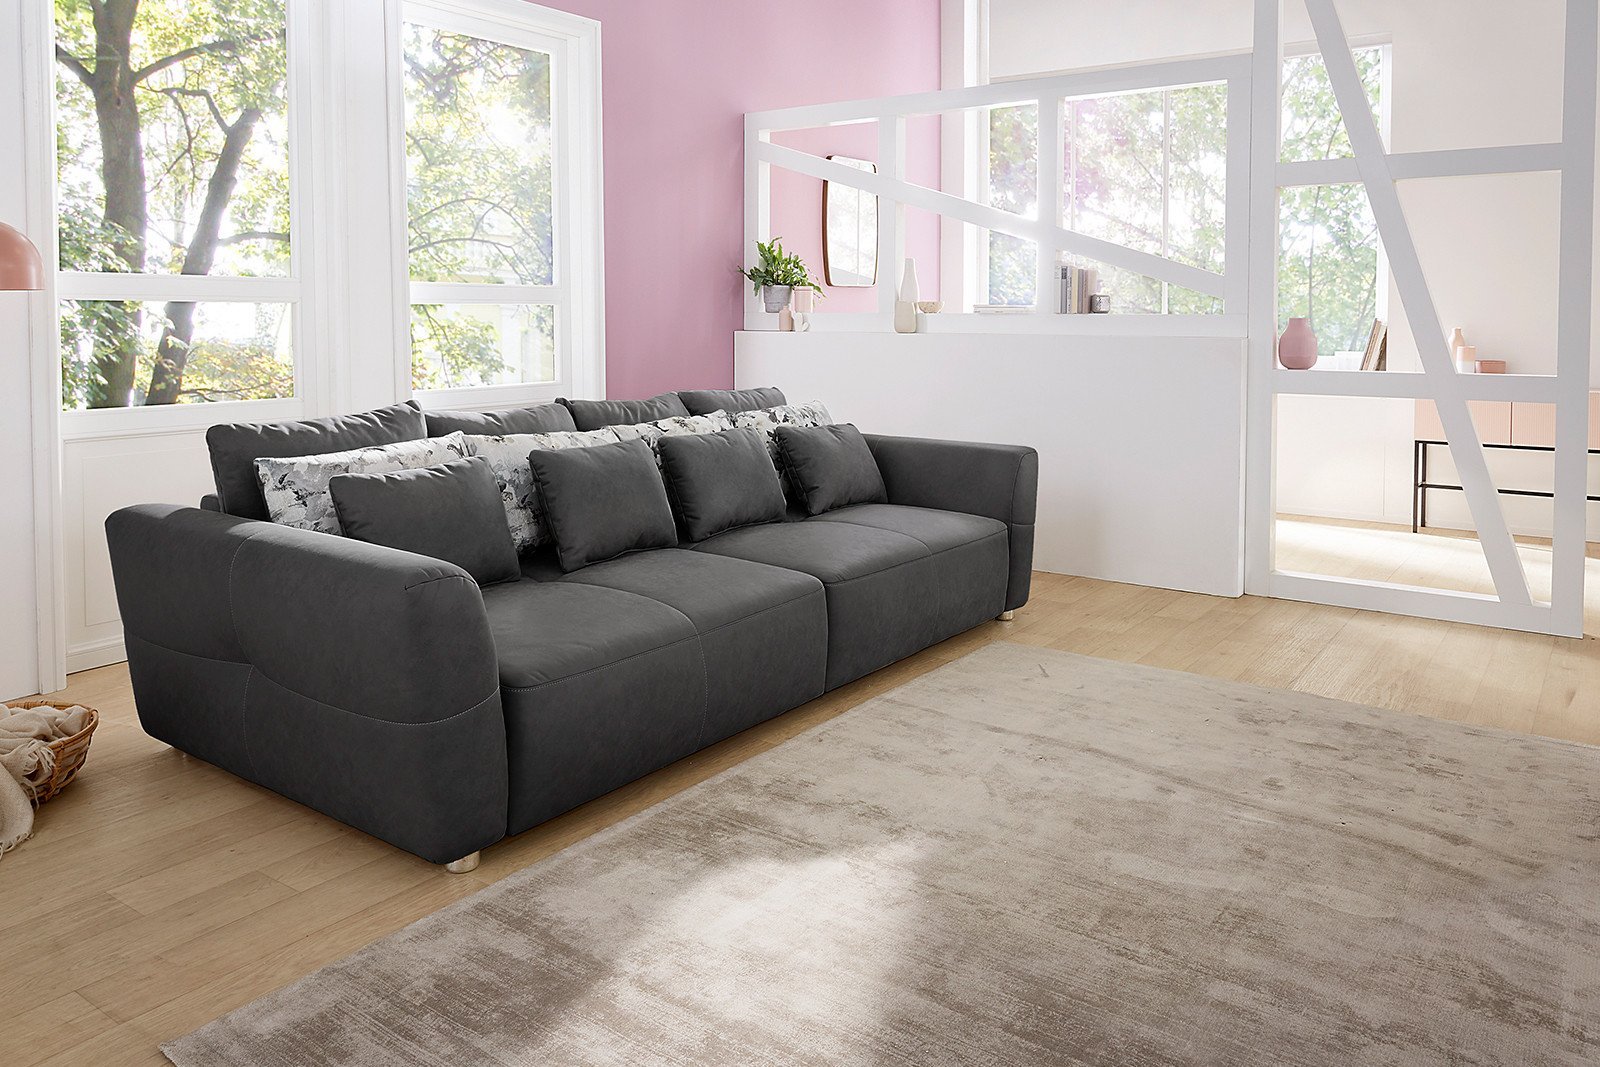 Jockenhöfer Gulliver Big Sofa dunkelgrau | Möbel Letz - Ihr Online-Shop